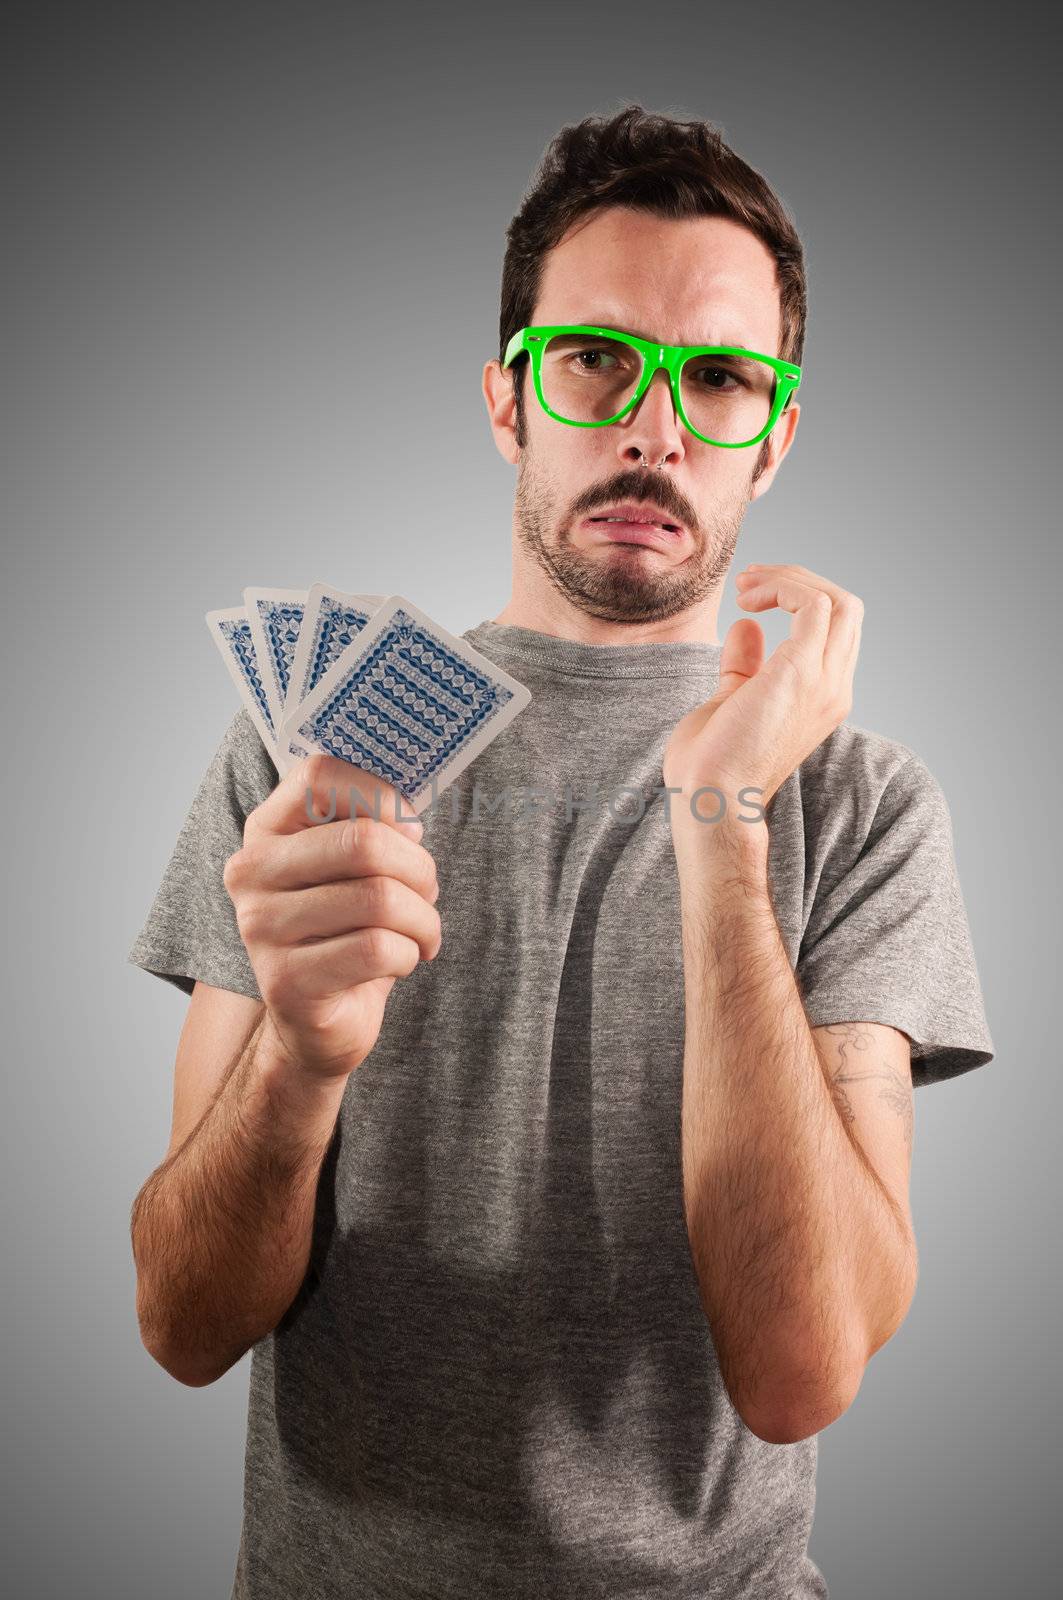 guy holding poker cards on grey background